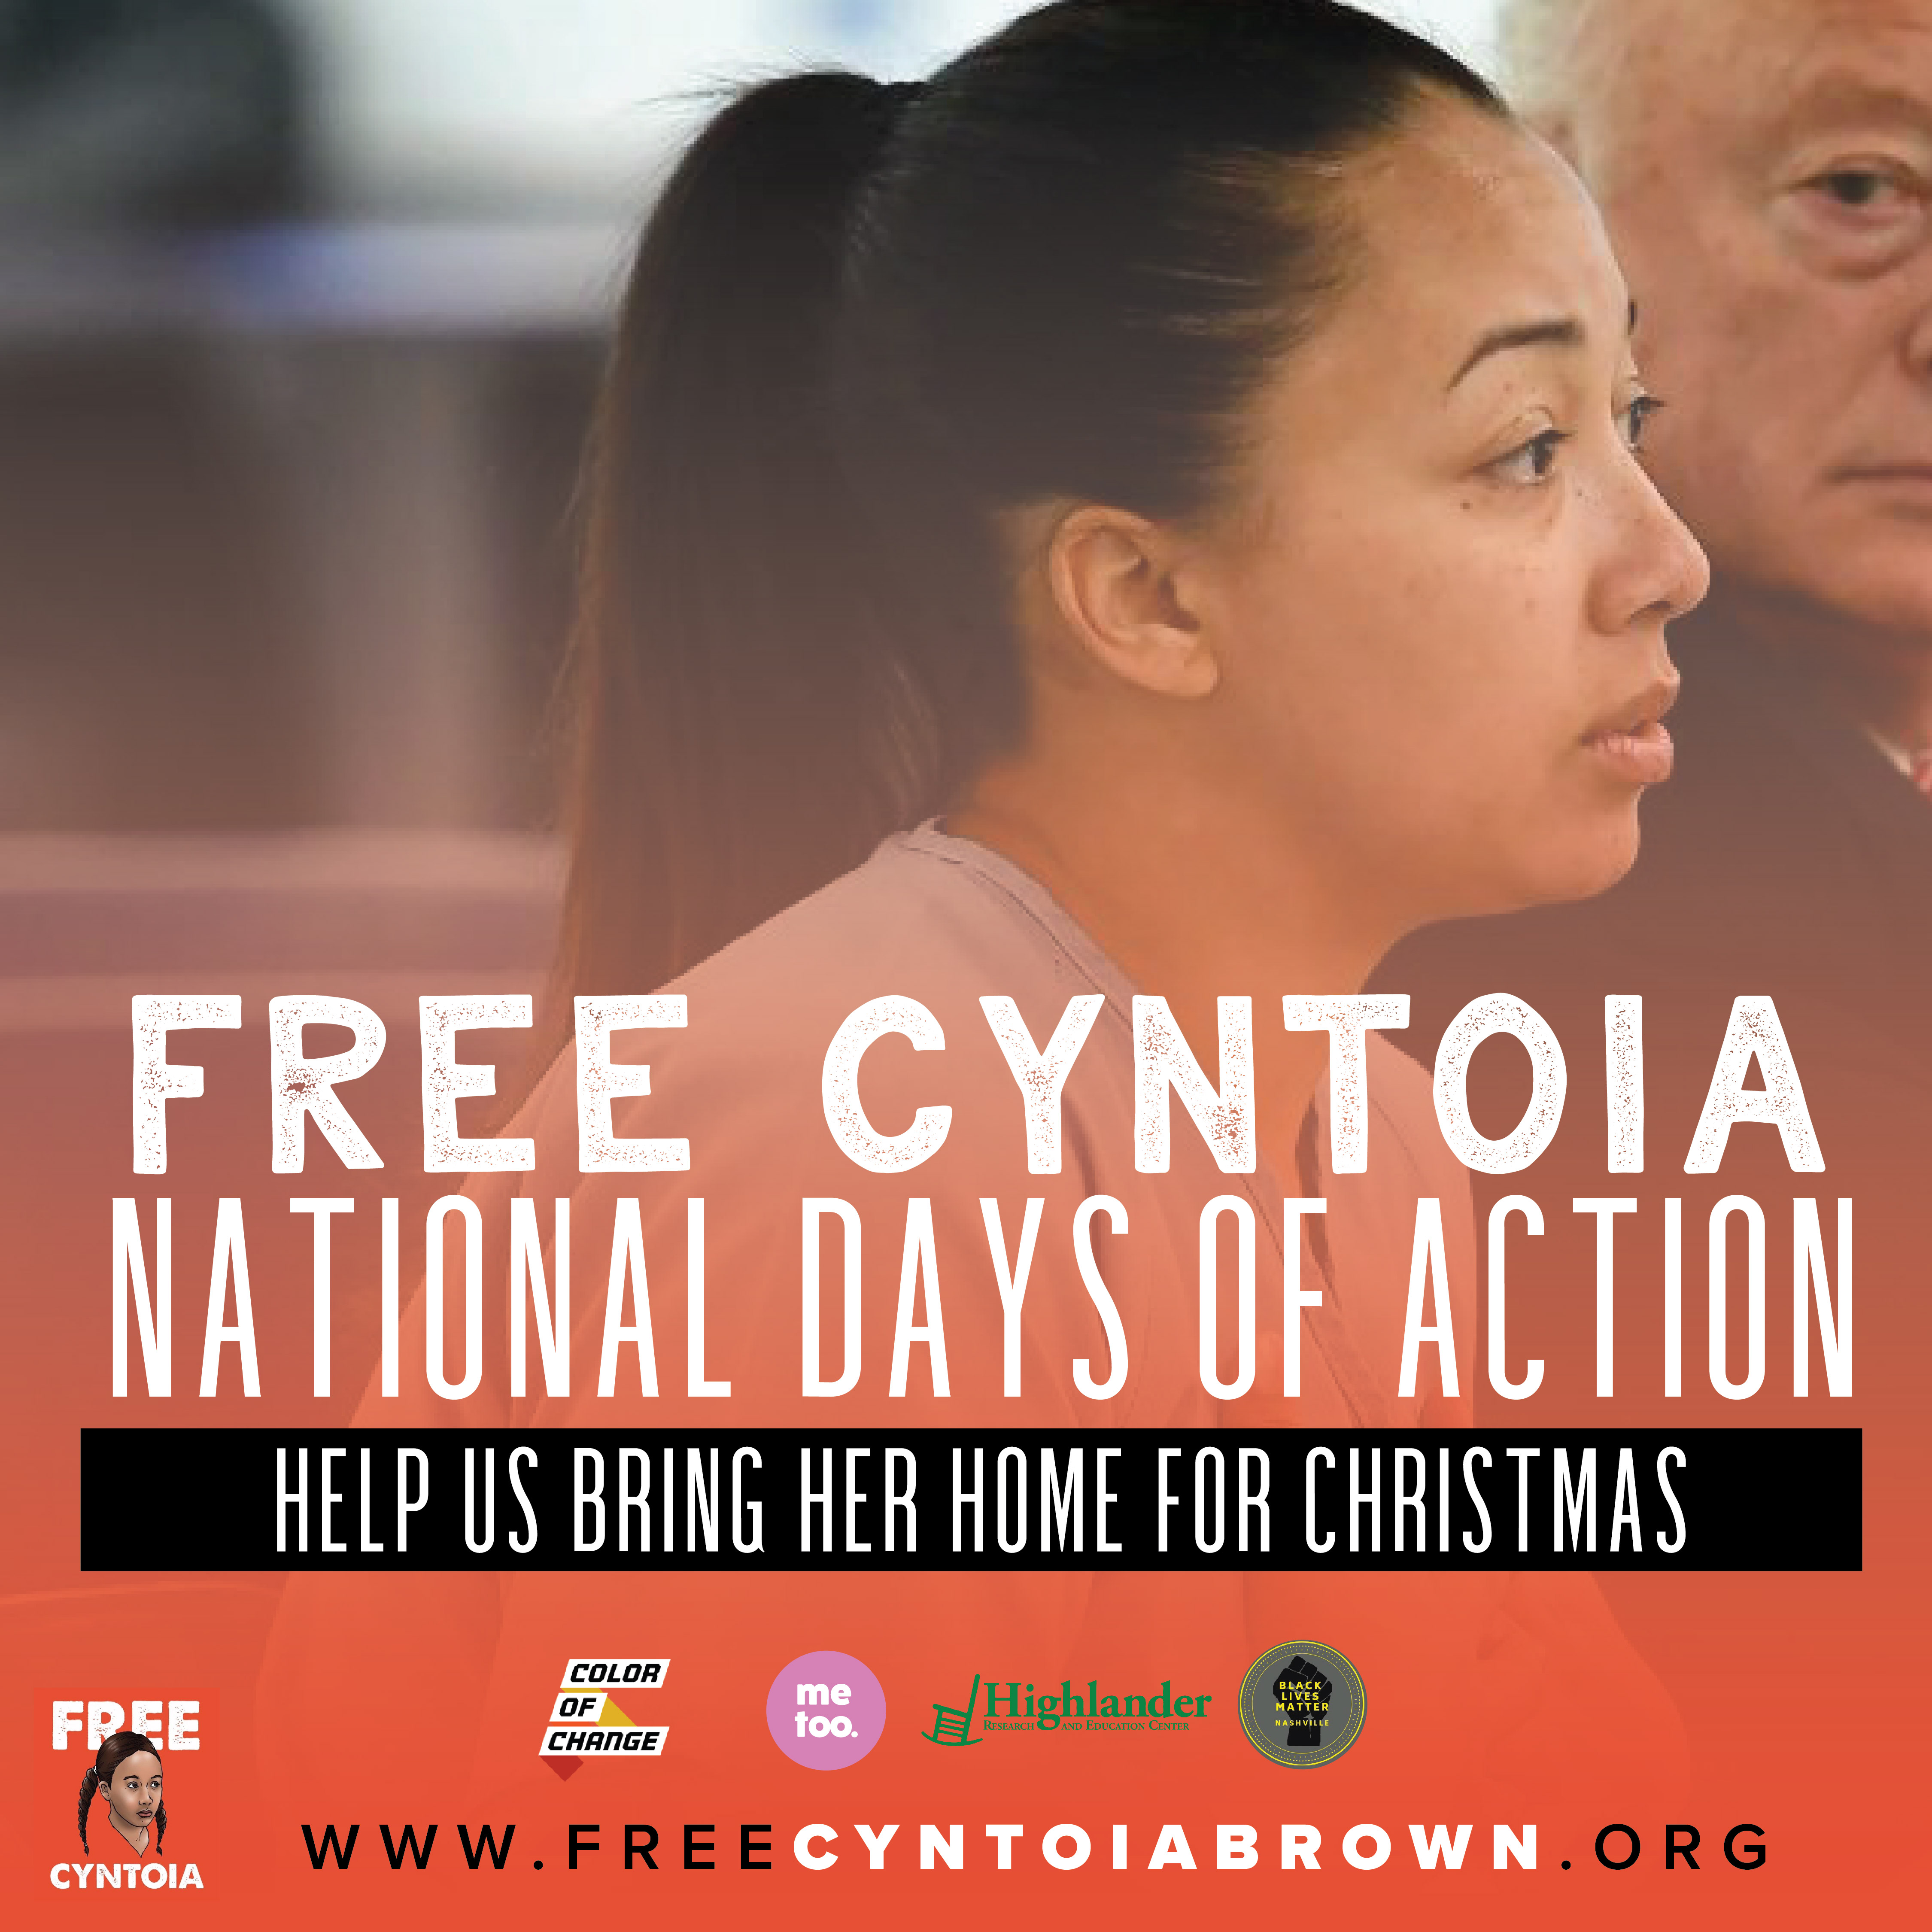 Free Cyntoia Brown